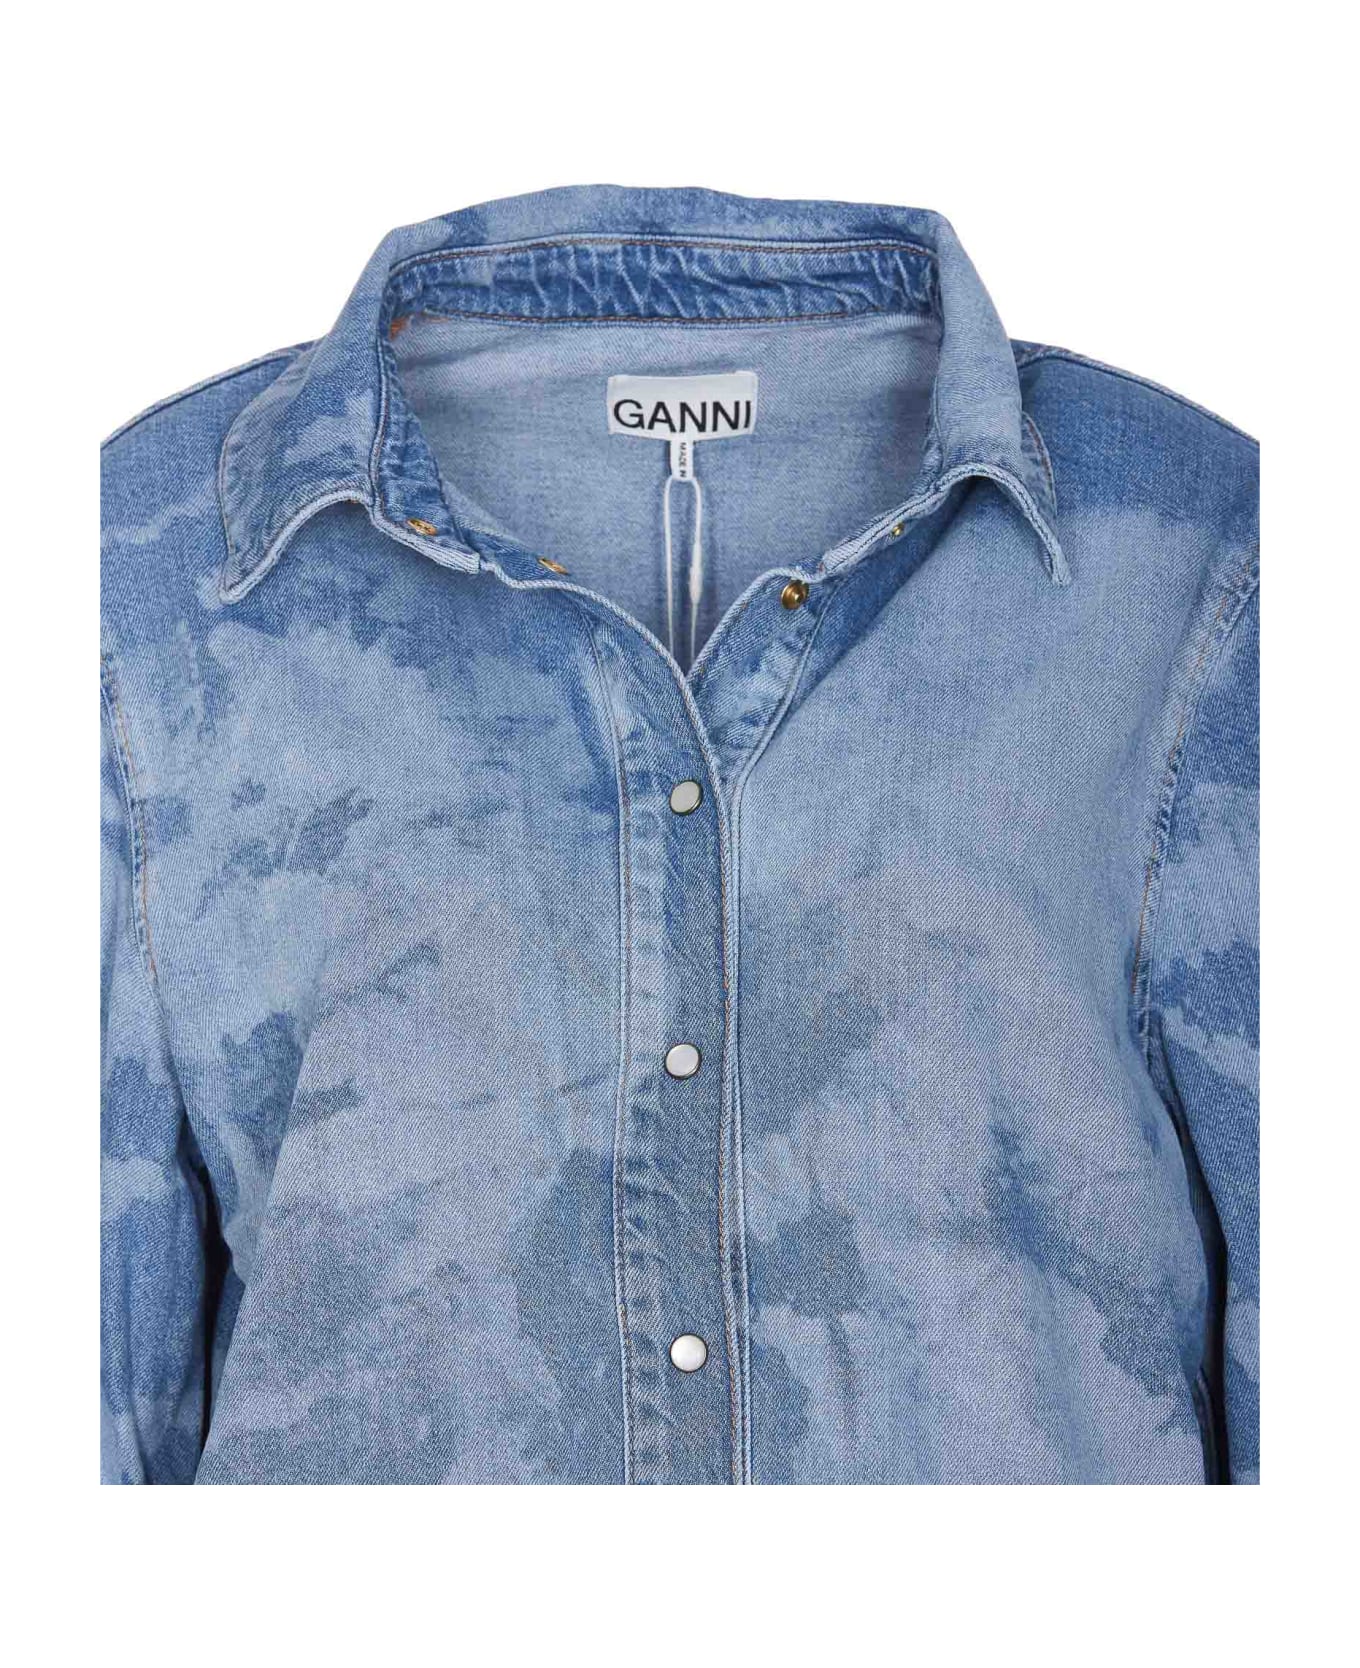 Ganni Denim Shirt - Blue